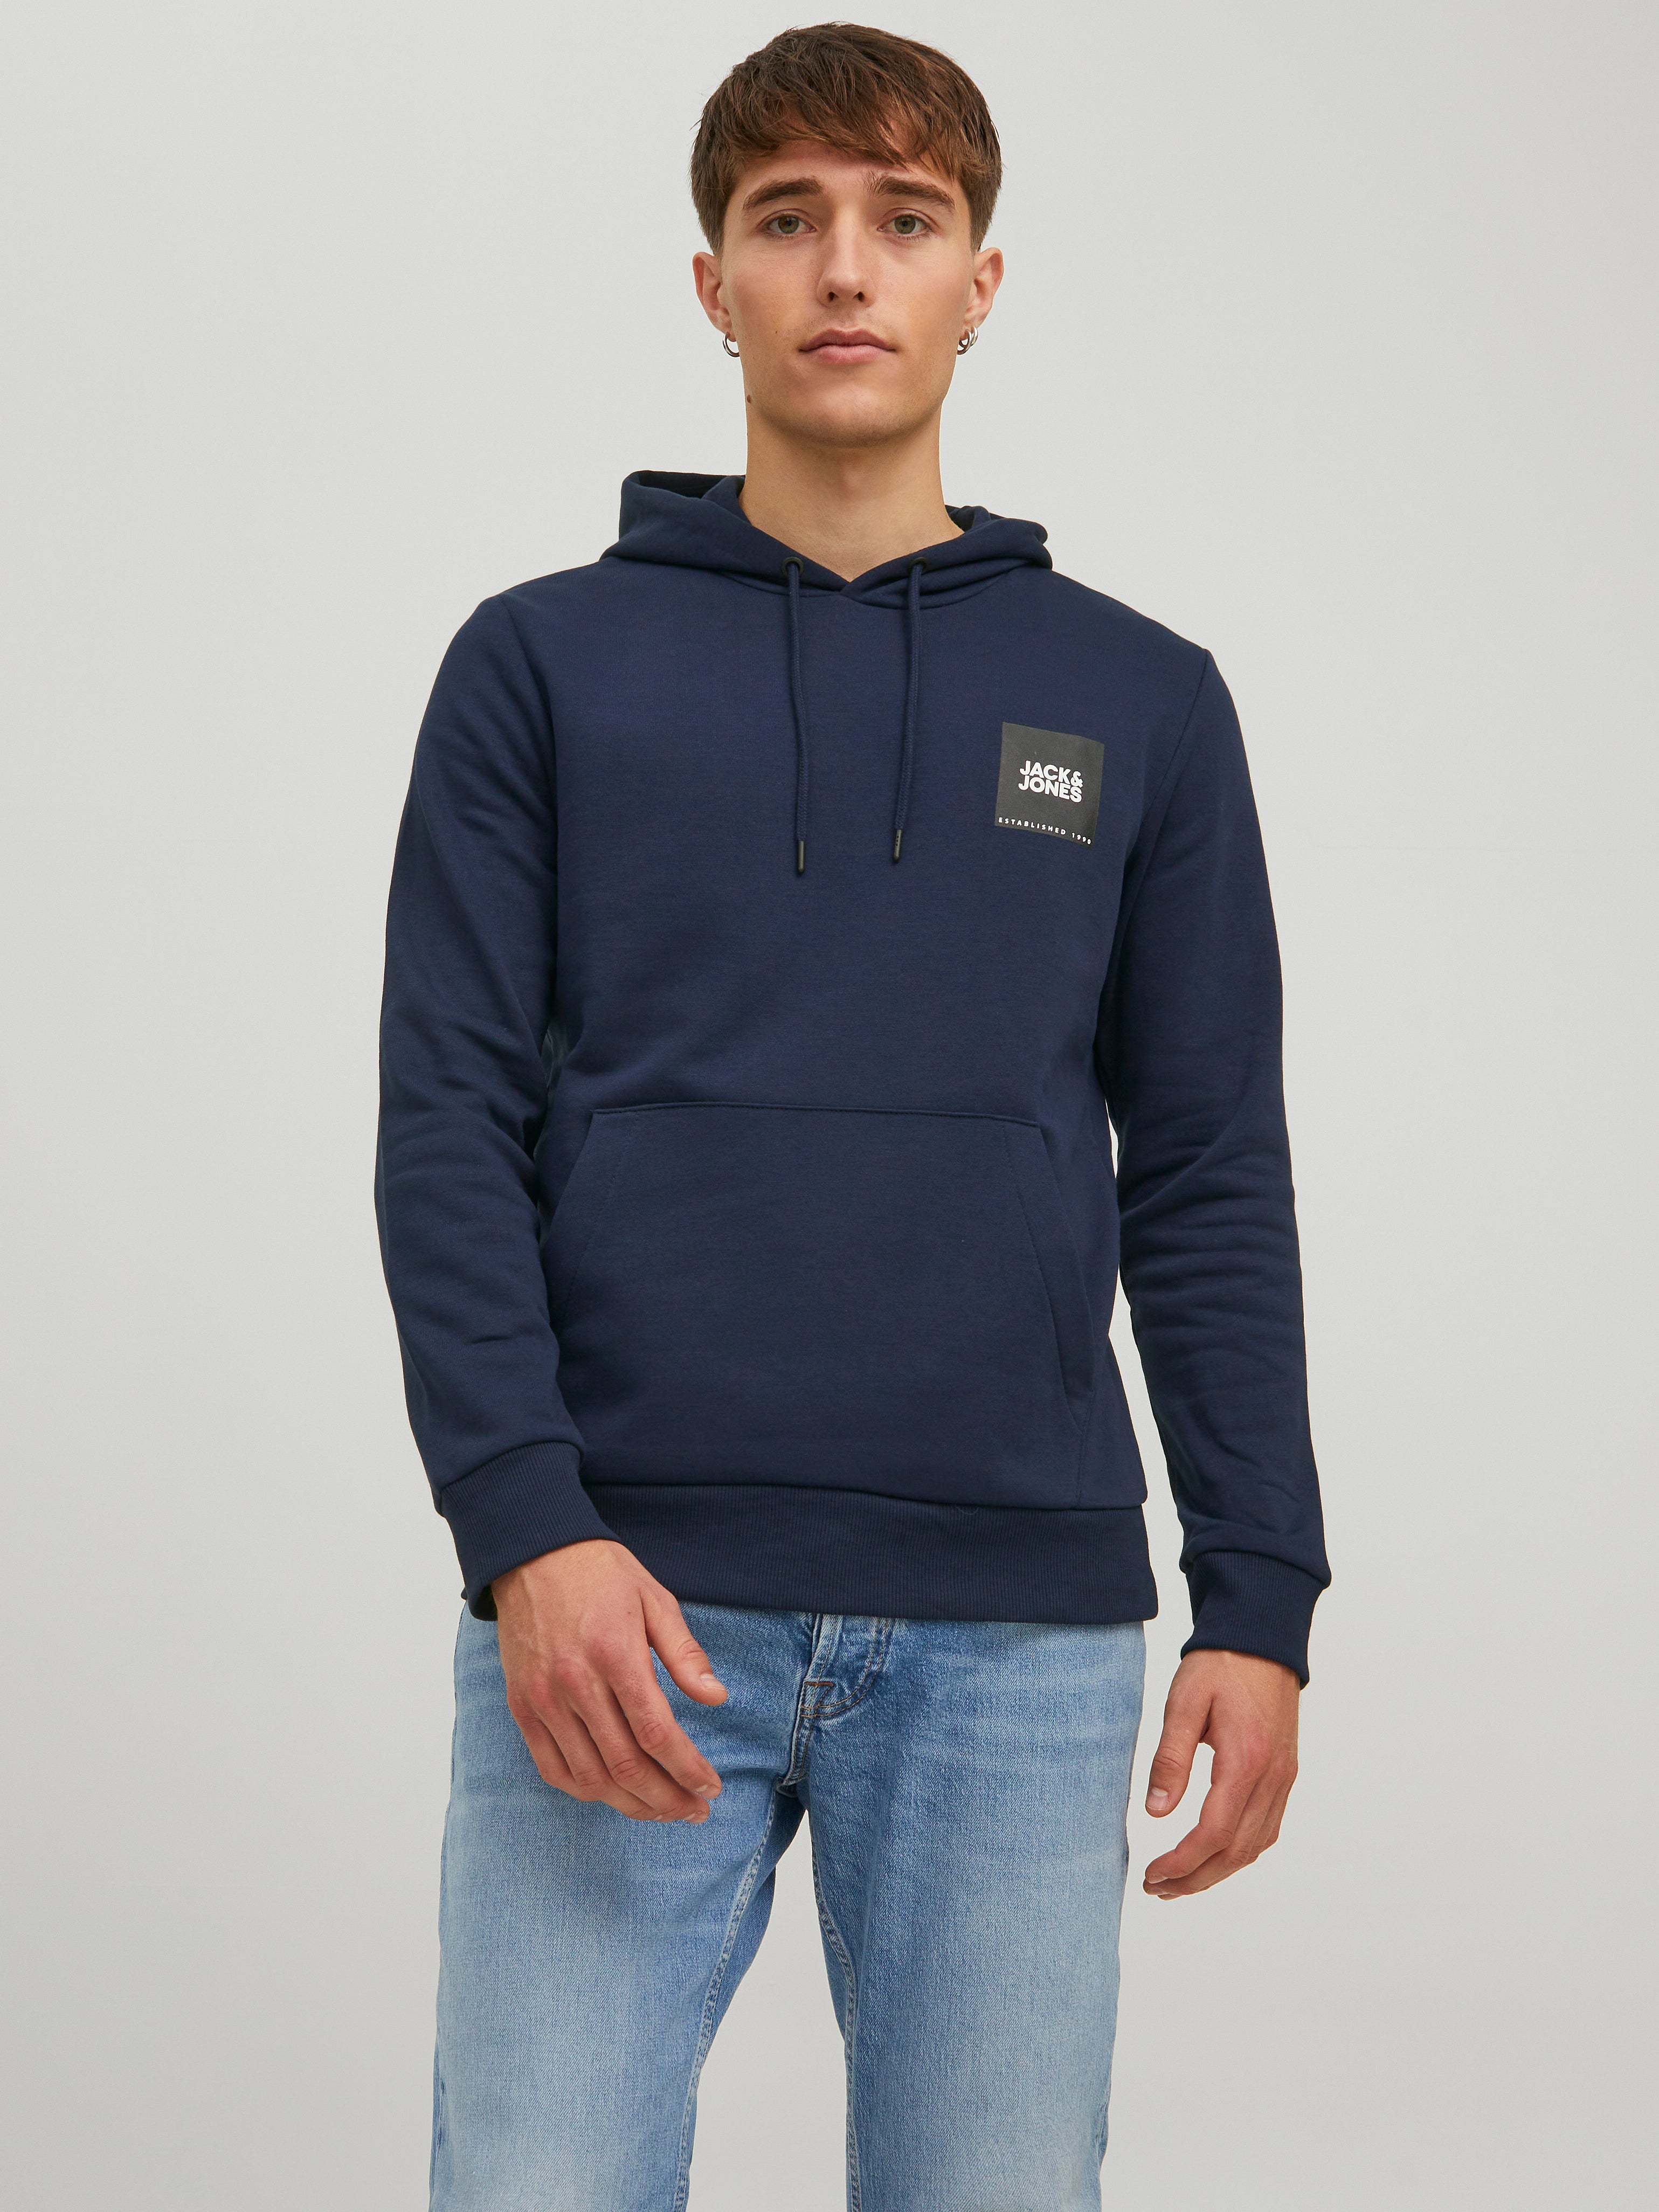 Jack & Jones sweatshirt discount 56% MEN FASHION Jumpers & Sweatshirts Hoodie Navy Blue L 